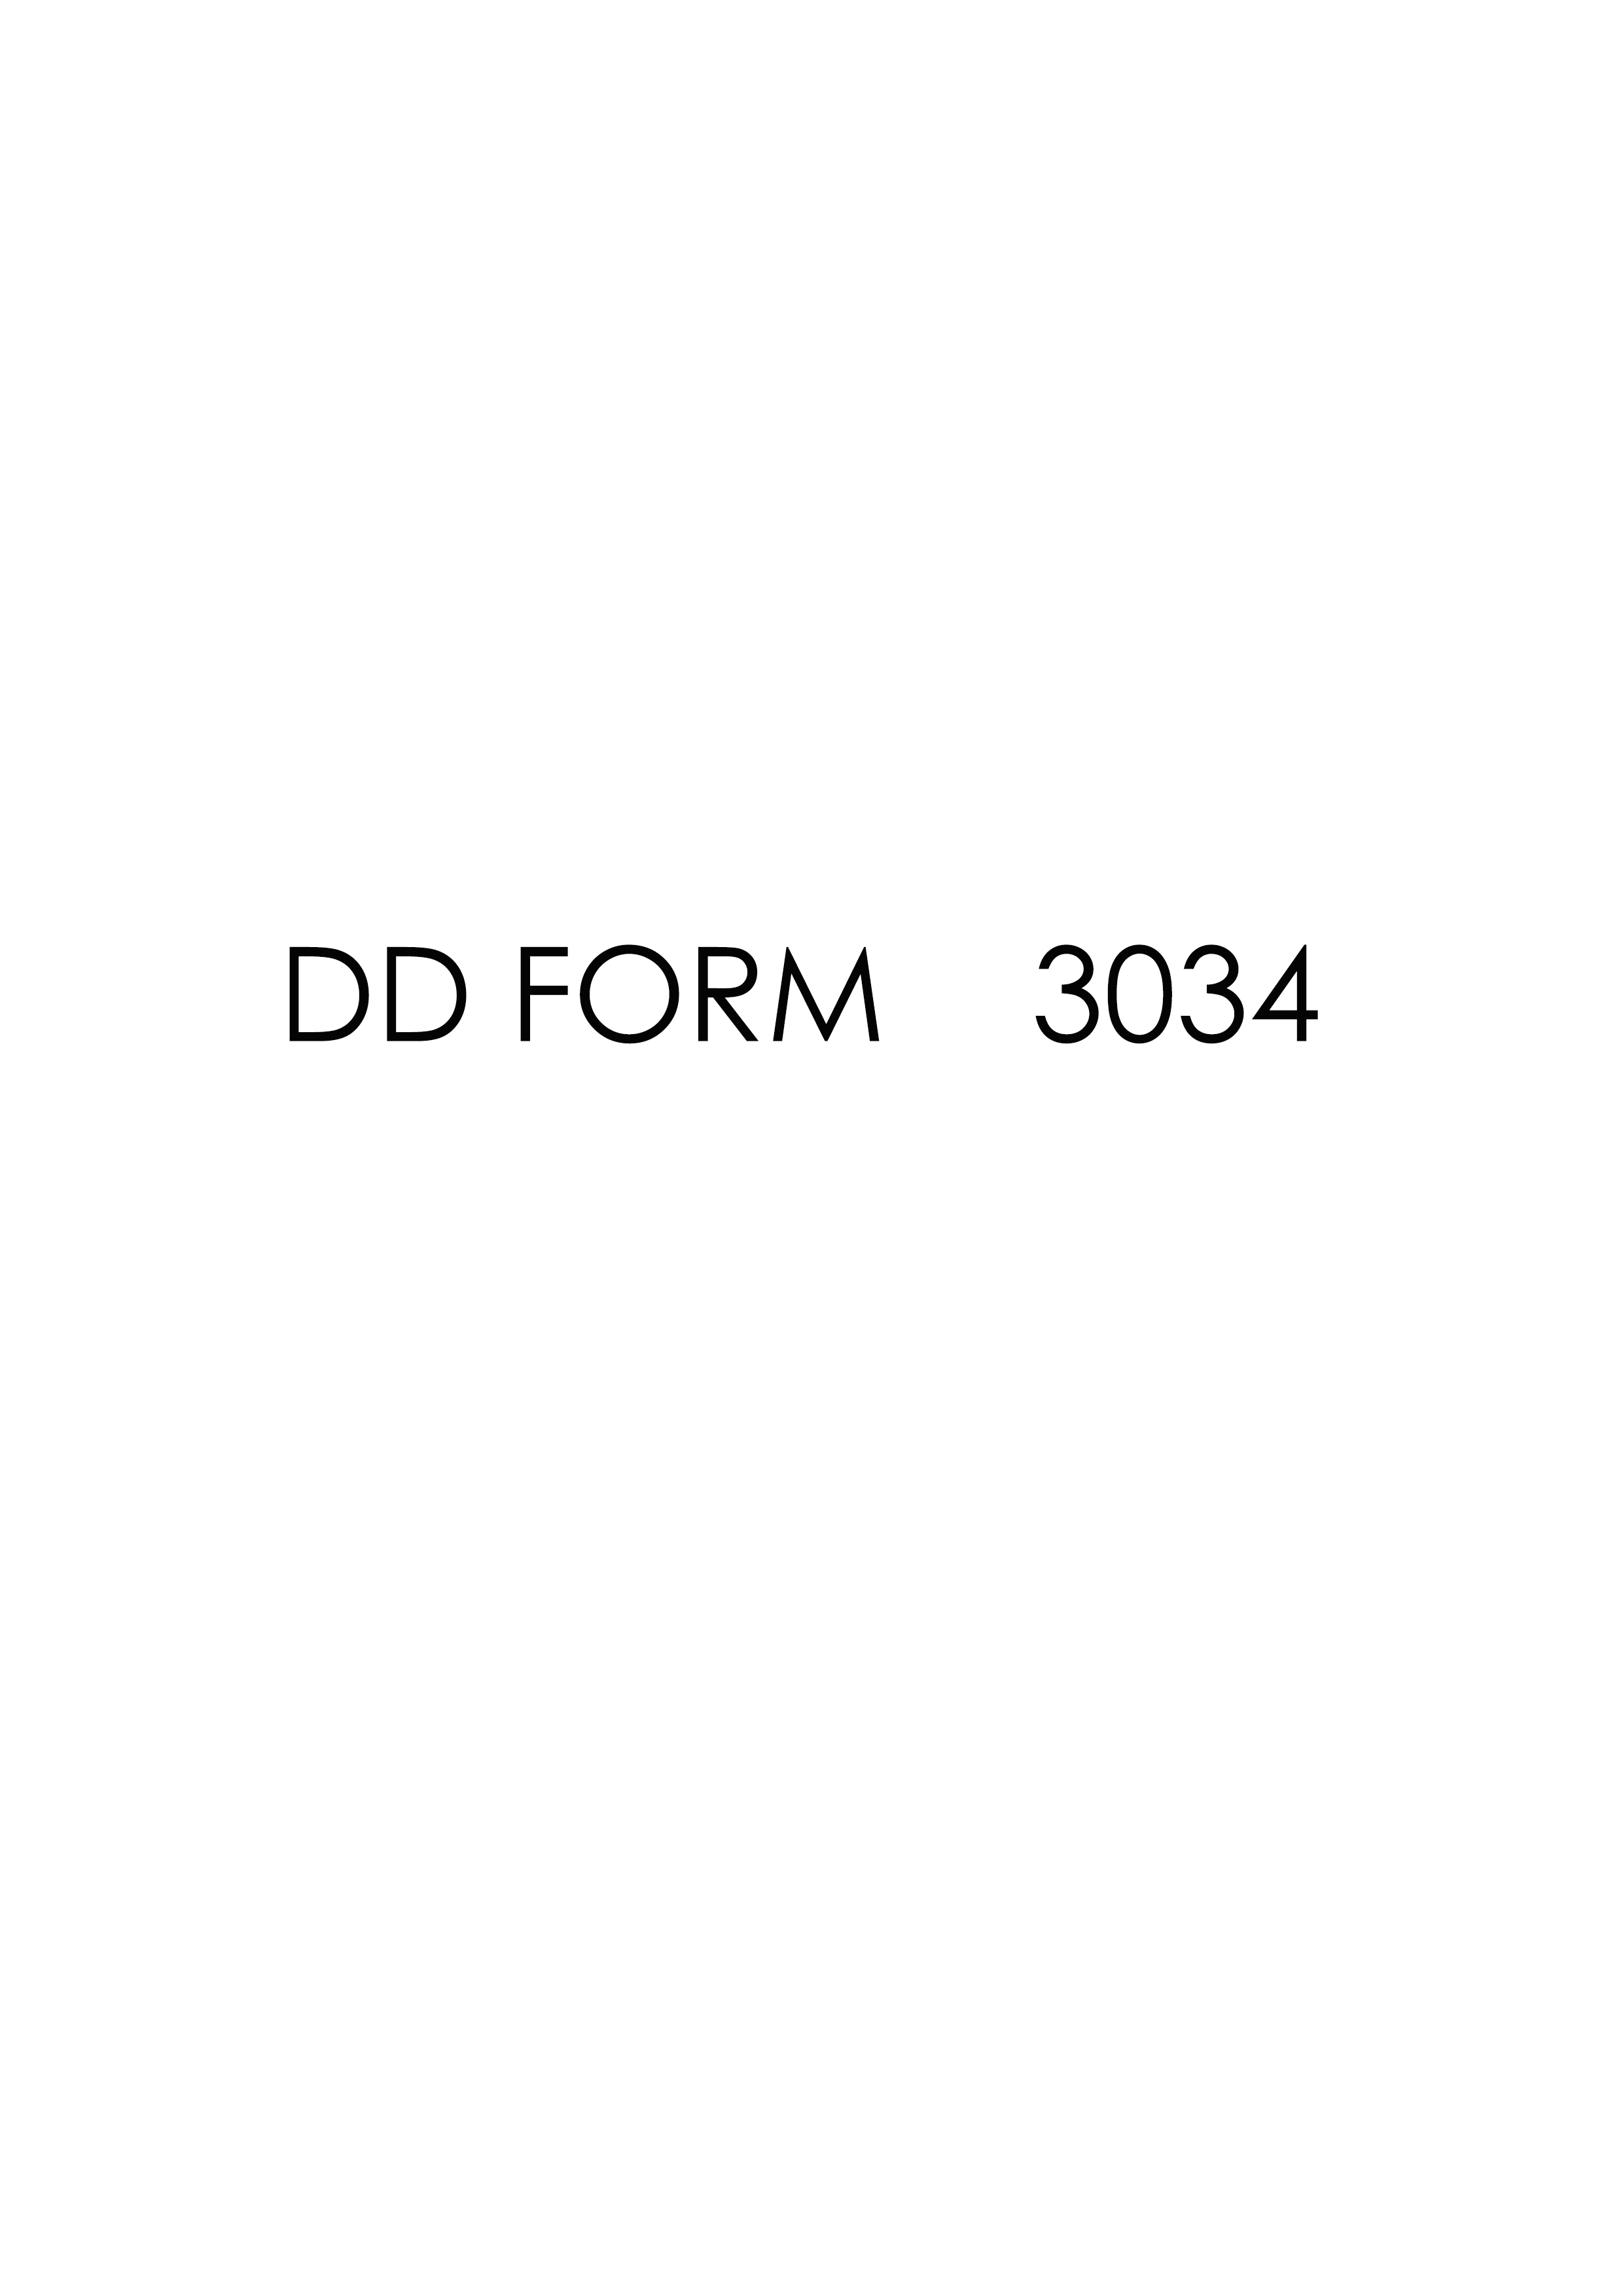 Download dd 3034 Form